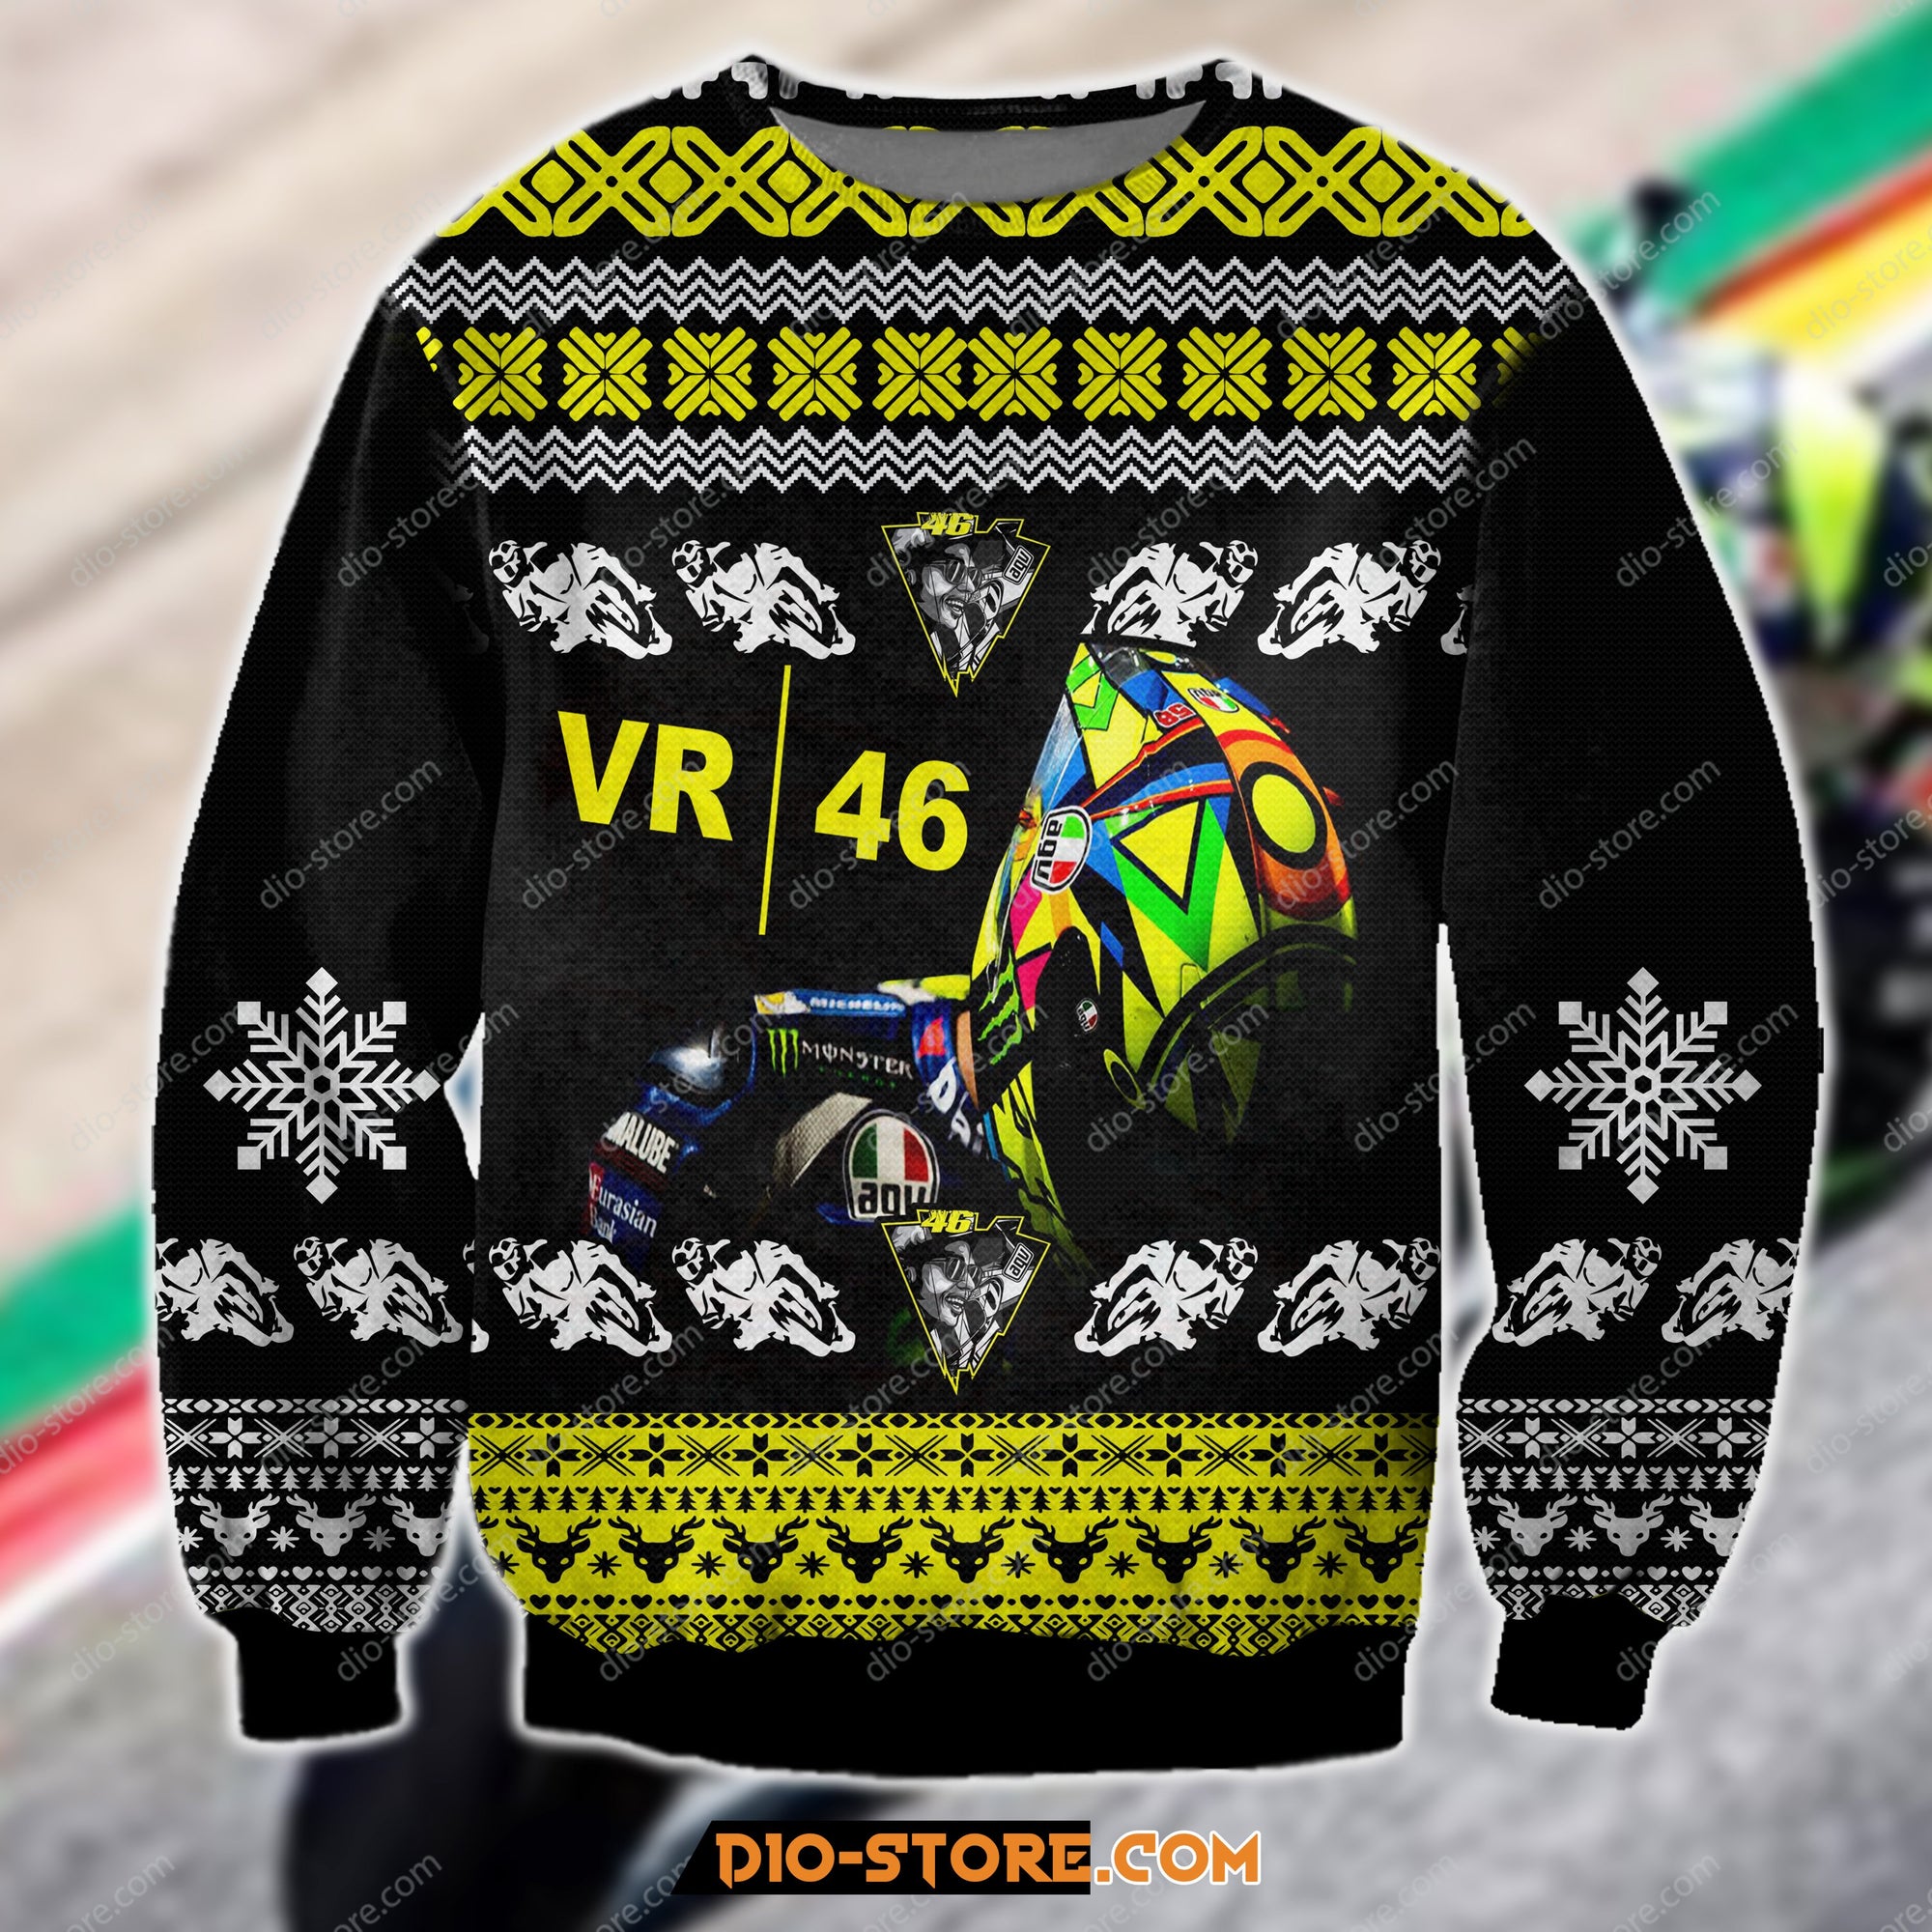 Sky Racing Vr46 3D Print Ugly Christmas Sweatshirt Hoodie All Over Printed Cint10080